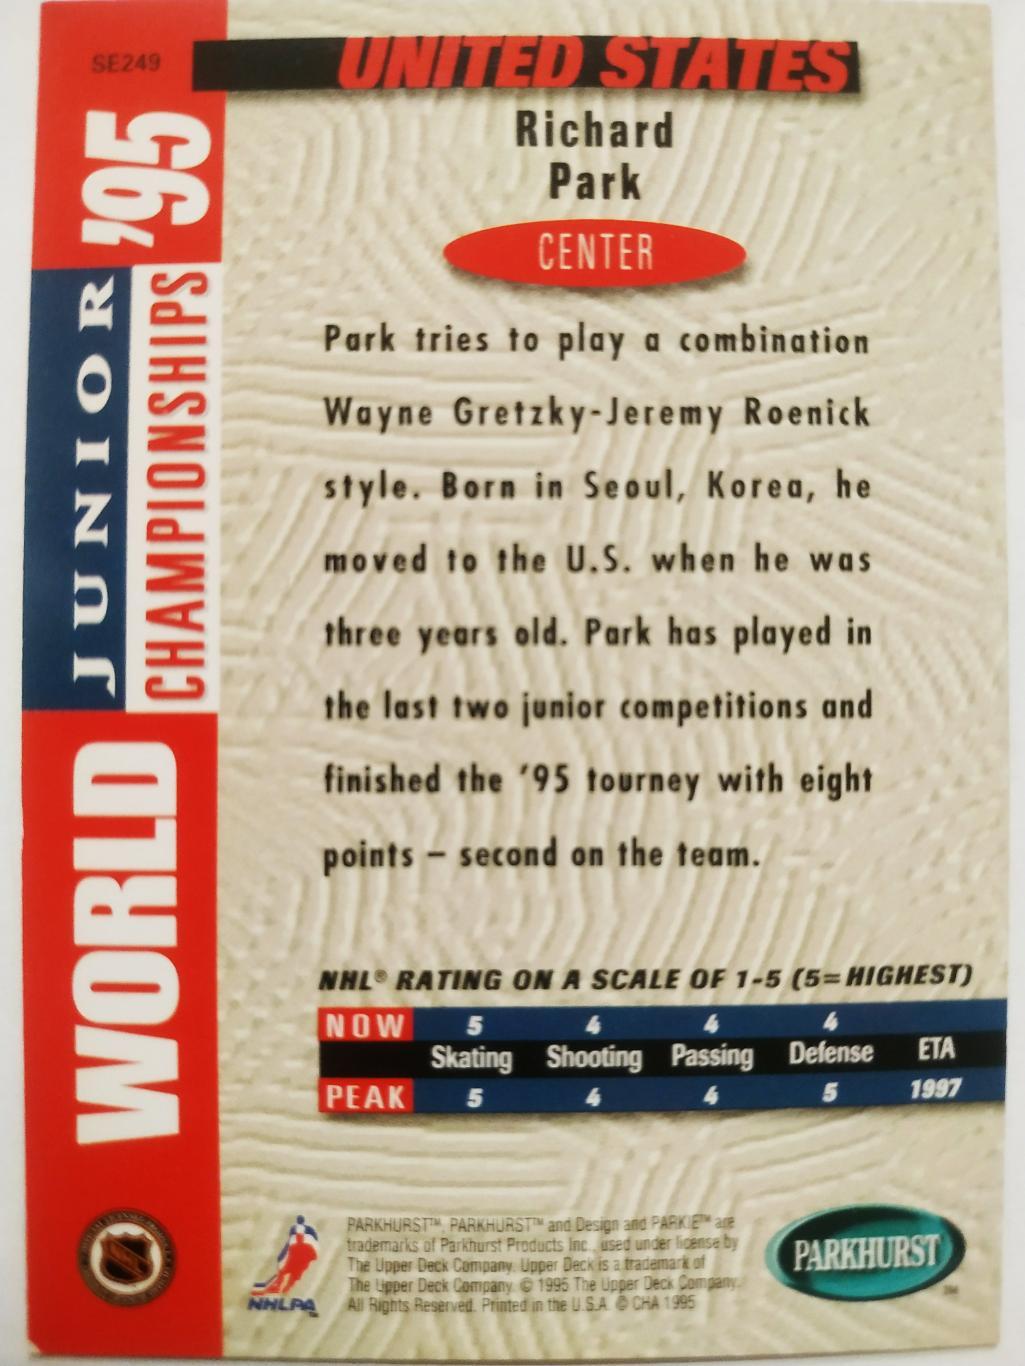 ХОККЕЙ КАРТОЧКА НХЛ PARKHURST 1994-95 NHL RICHARD PARK UNITED STATES #SE249 1